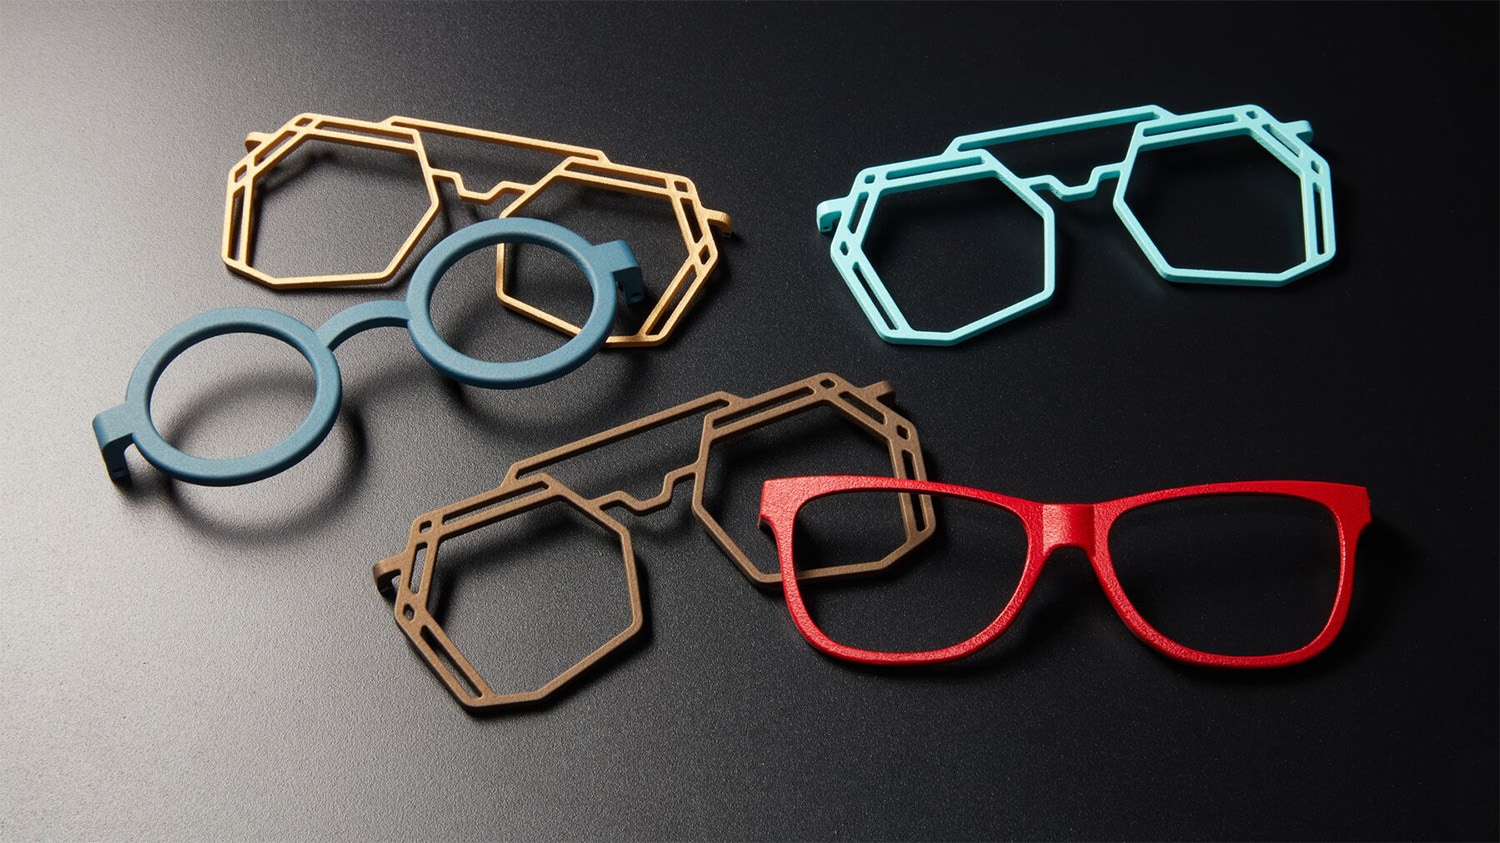 Cerakoted glasses frames